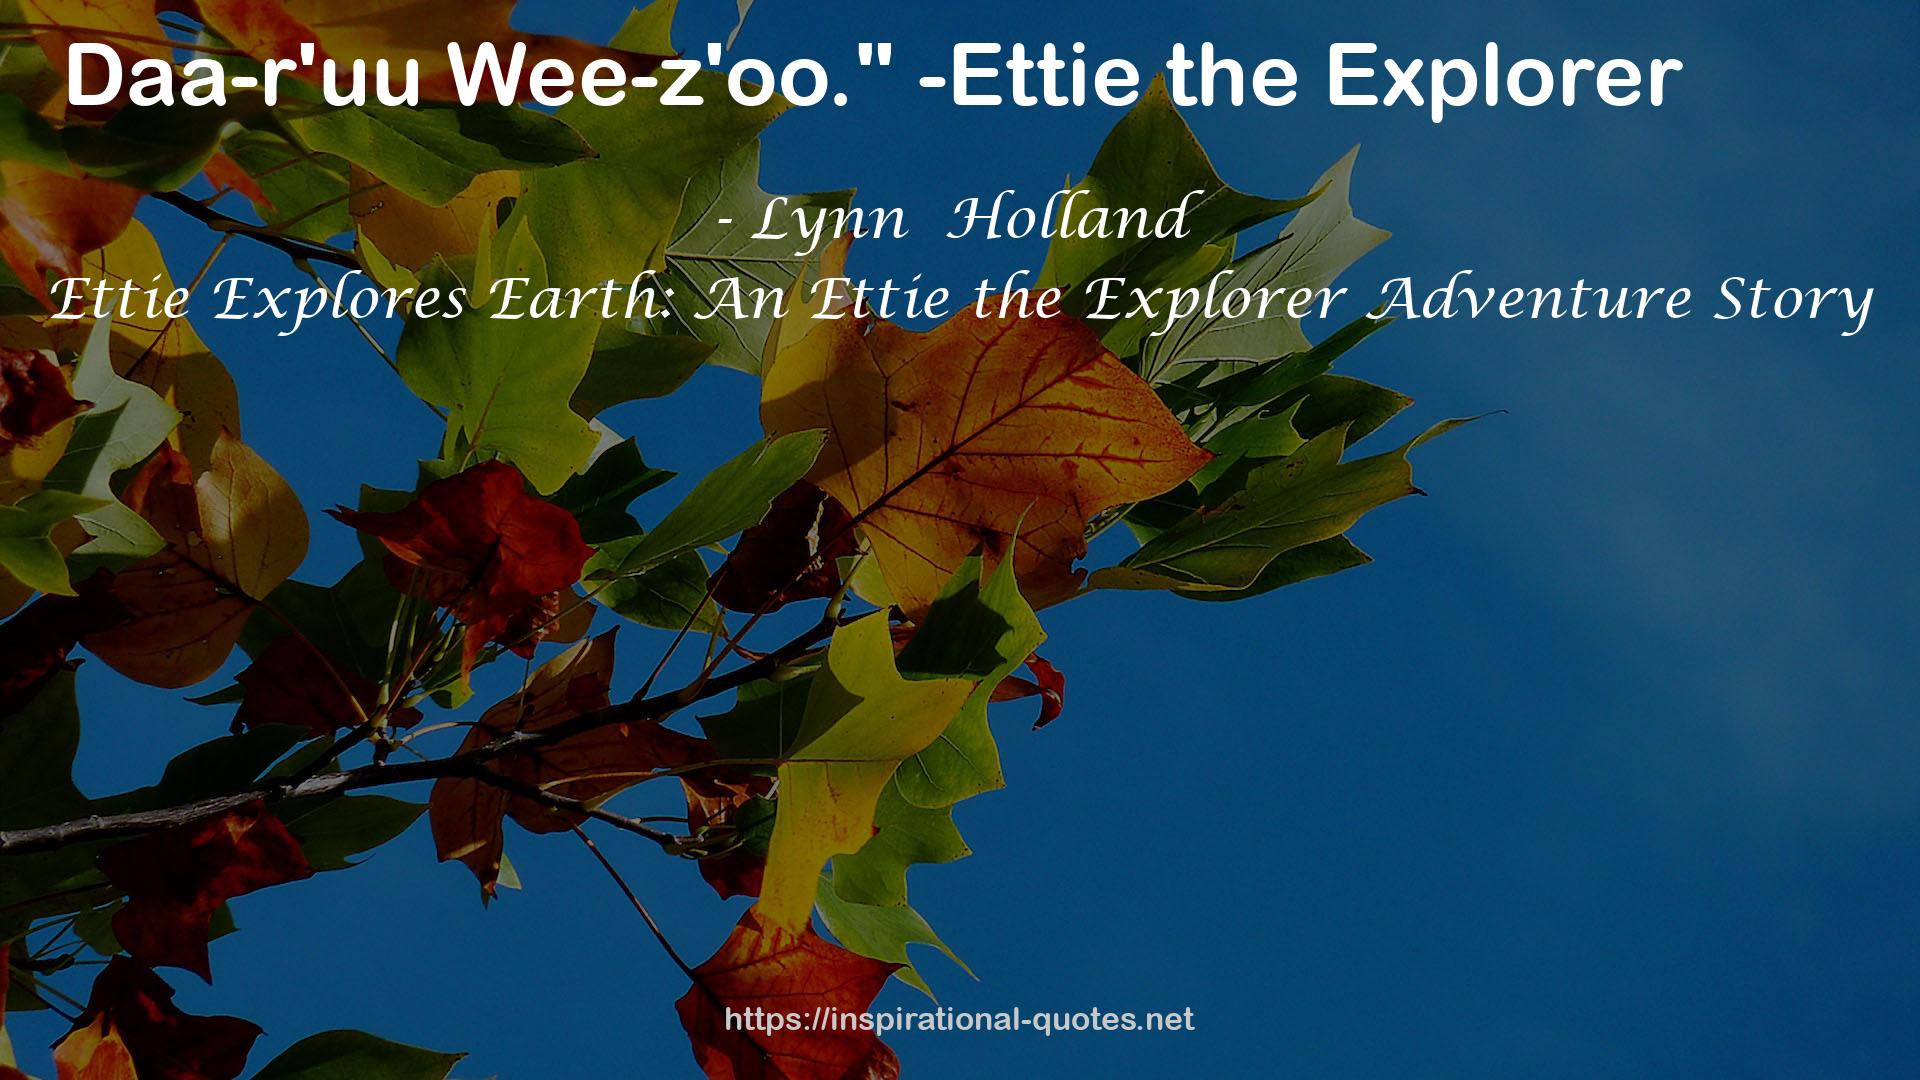 Ettie Explores Earth: An Ettie the Explorer Adventure Story QUOTES